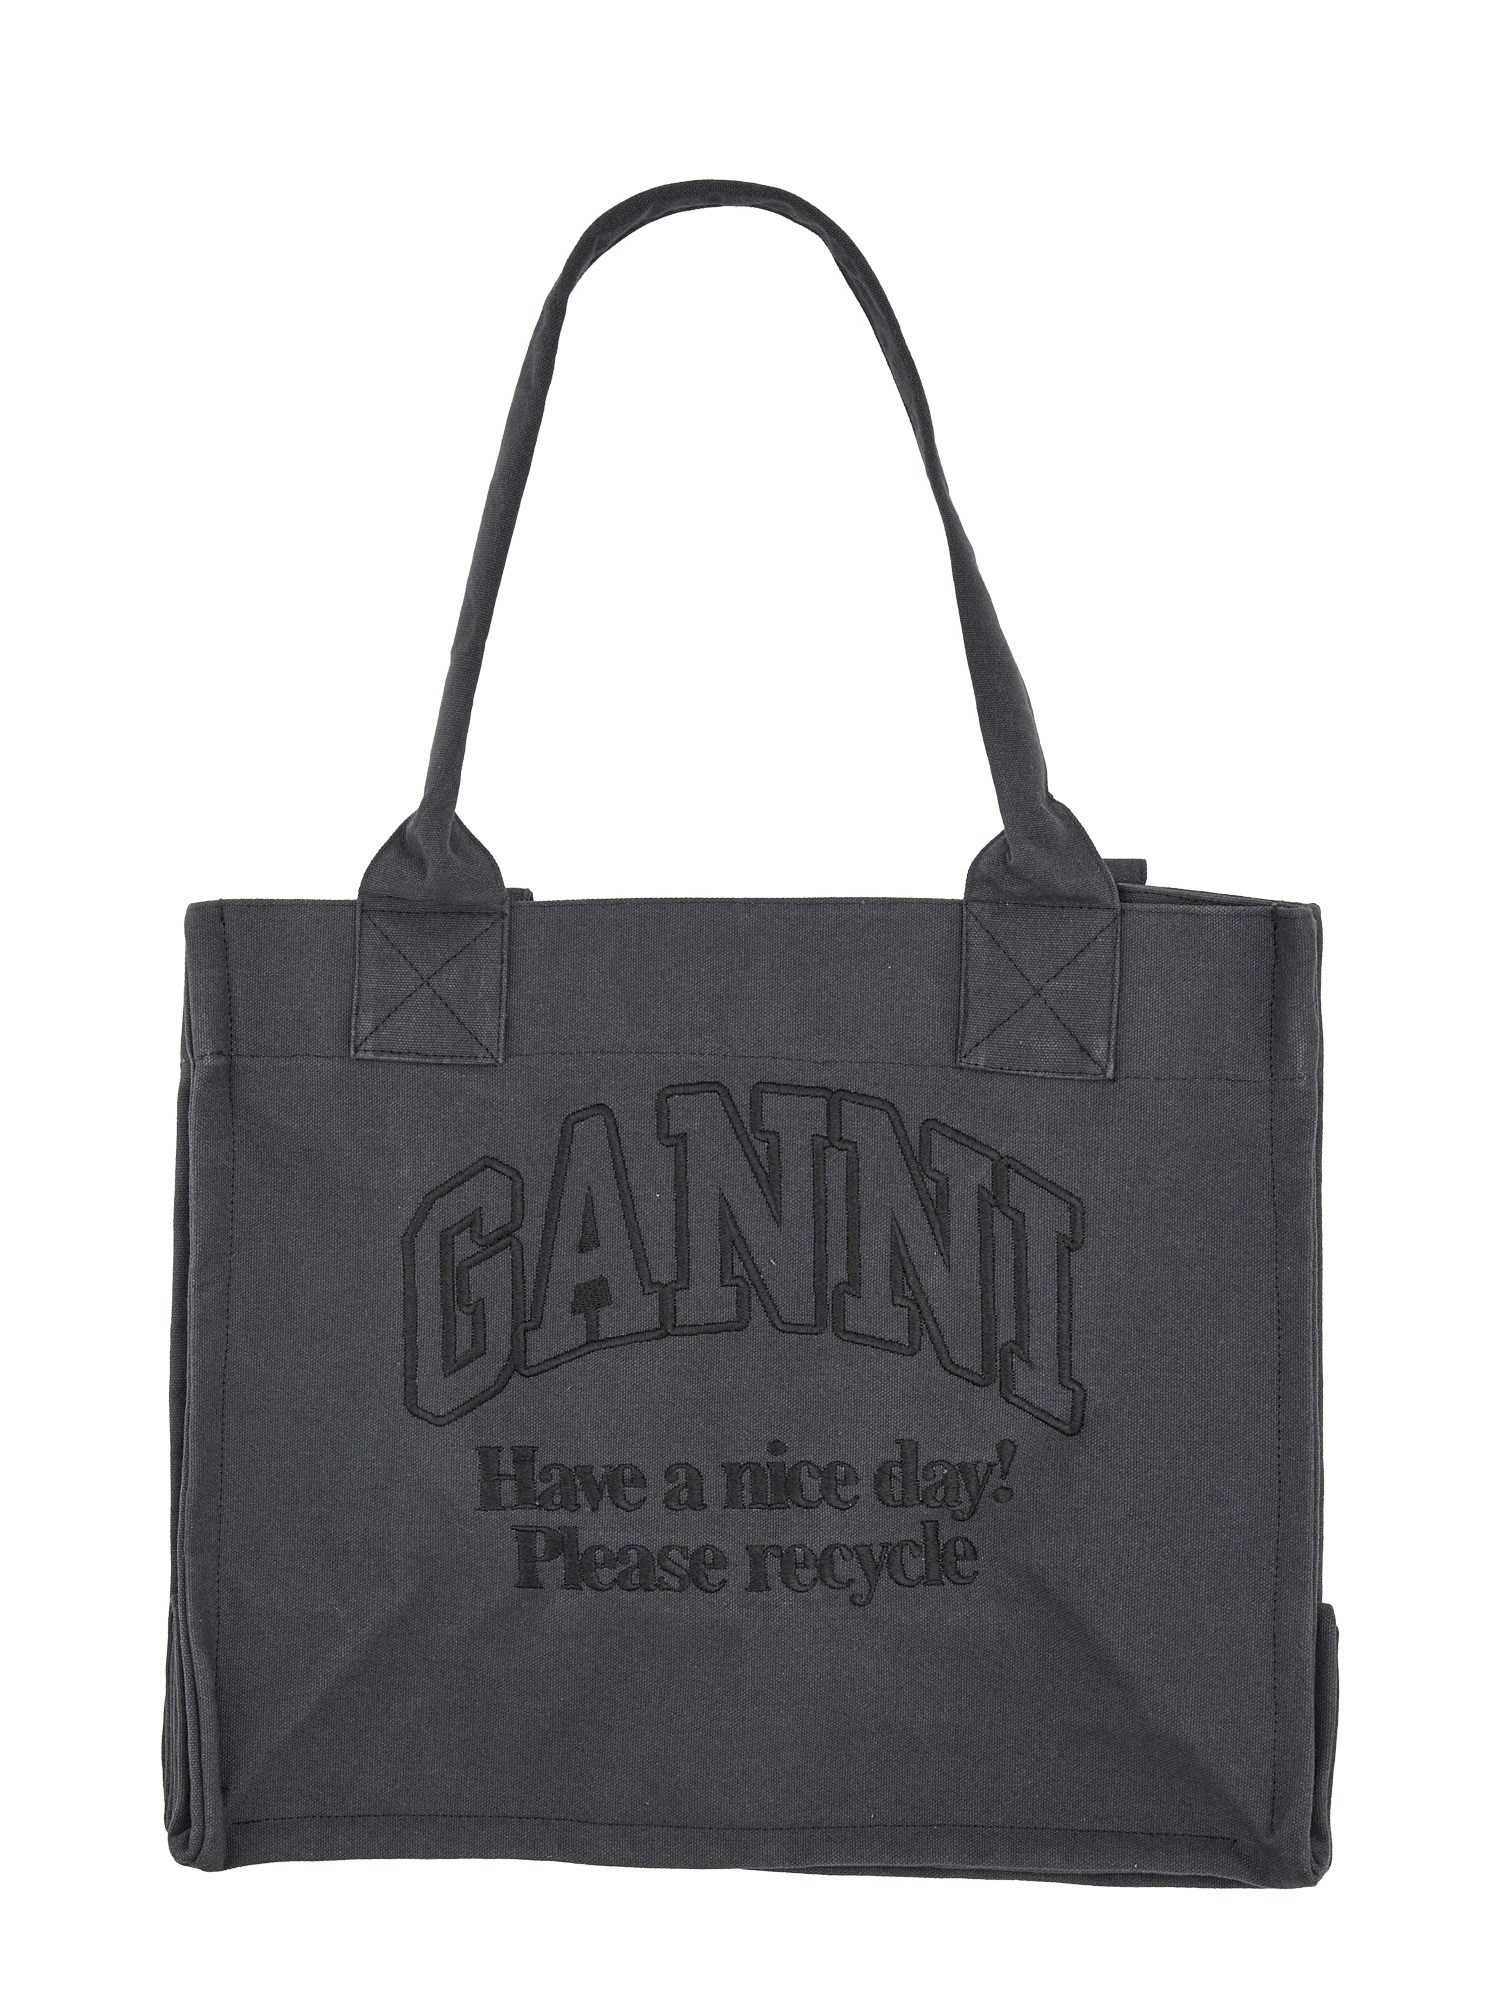 ganni large tote bag with logo